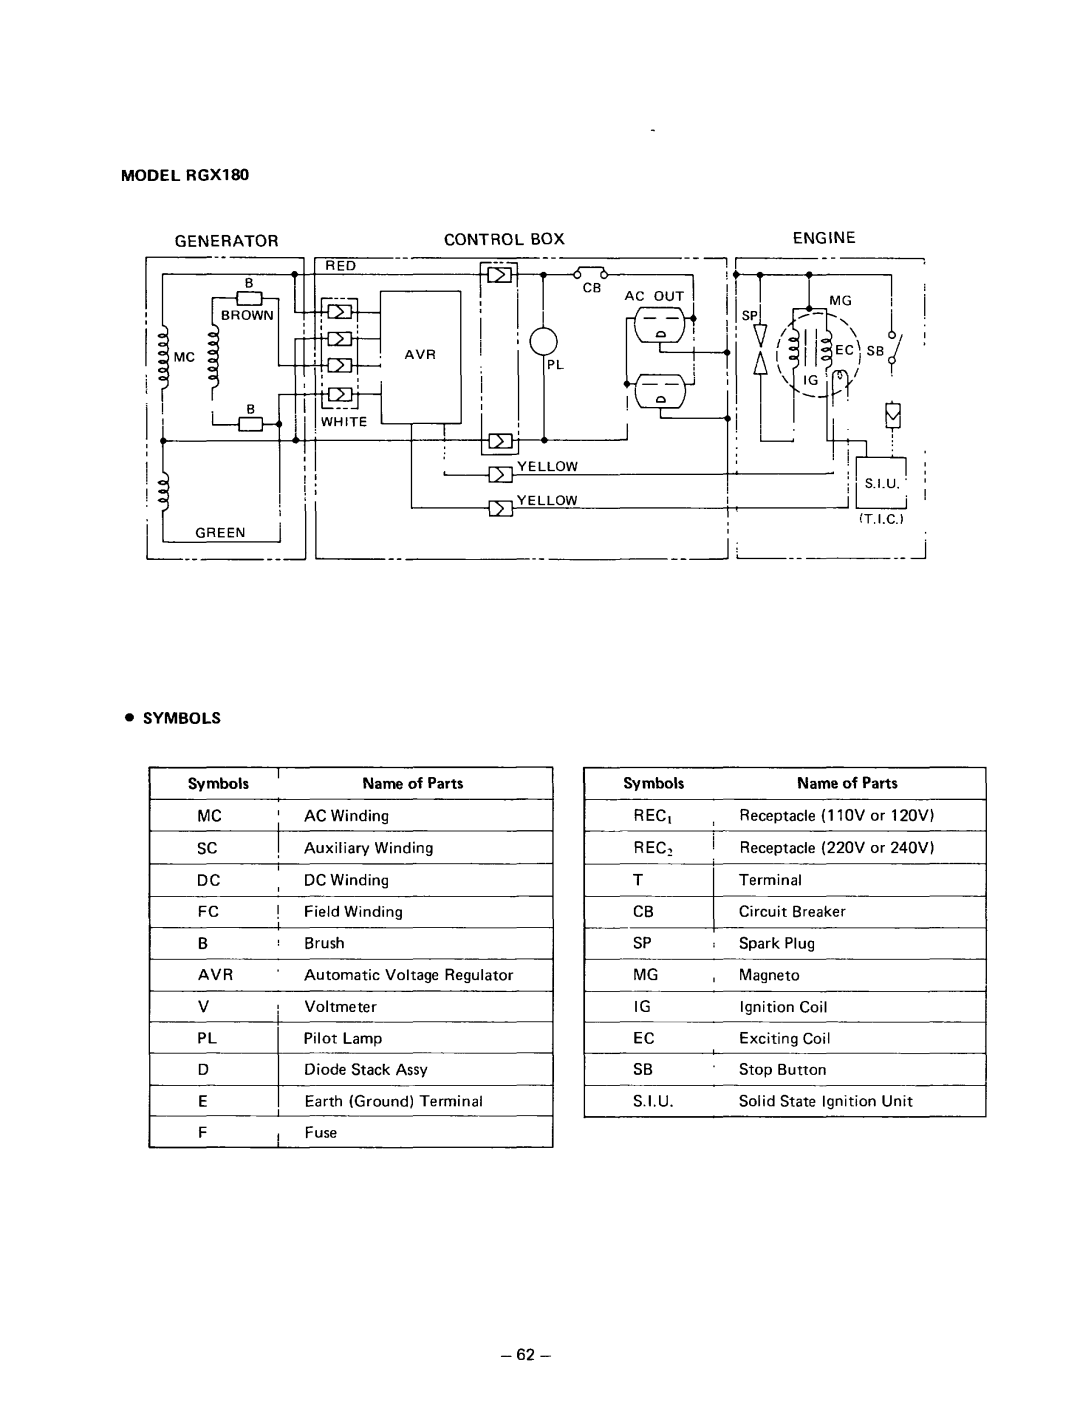 Subaru Robin Power Products RGX240D, RGX180 manual 